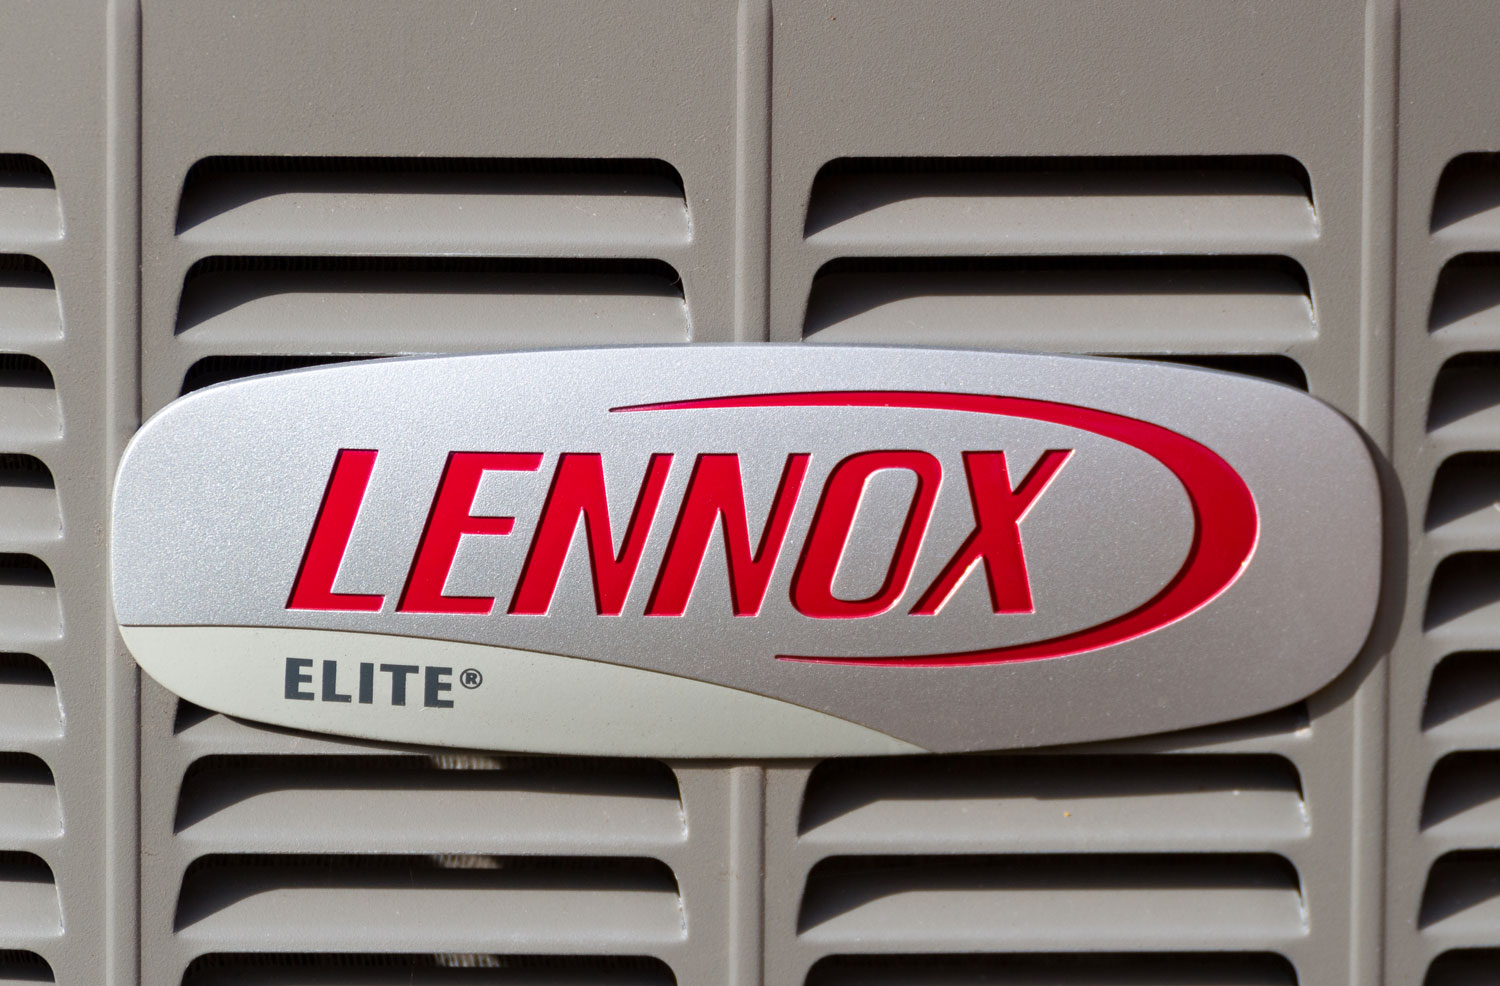 Lennox Corporation trademark logo and trademark.